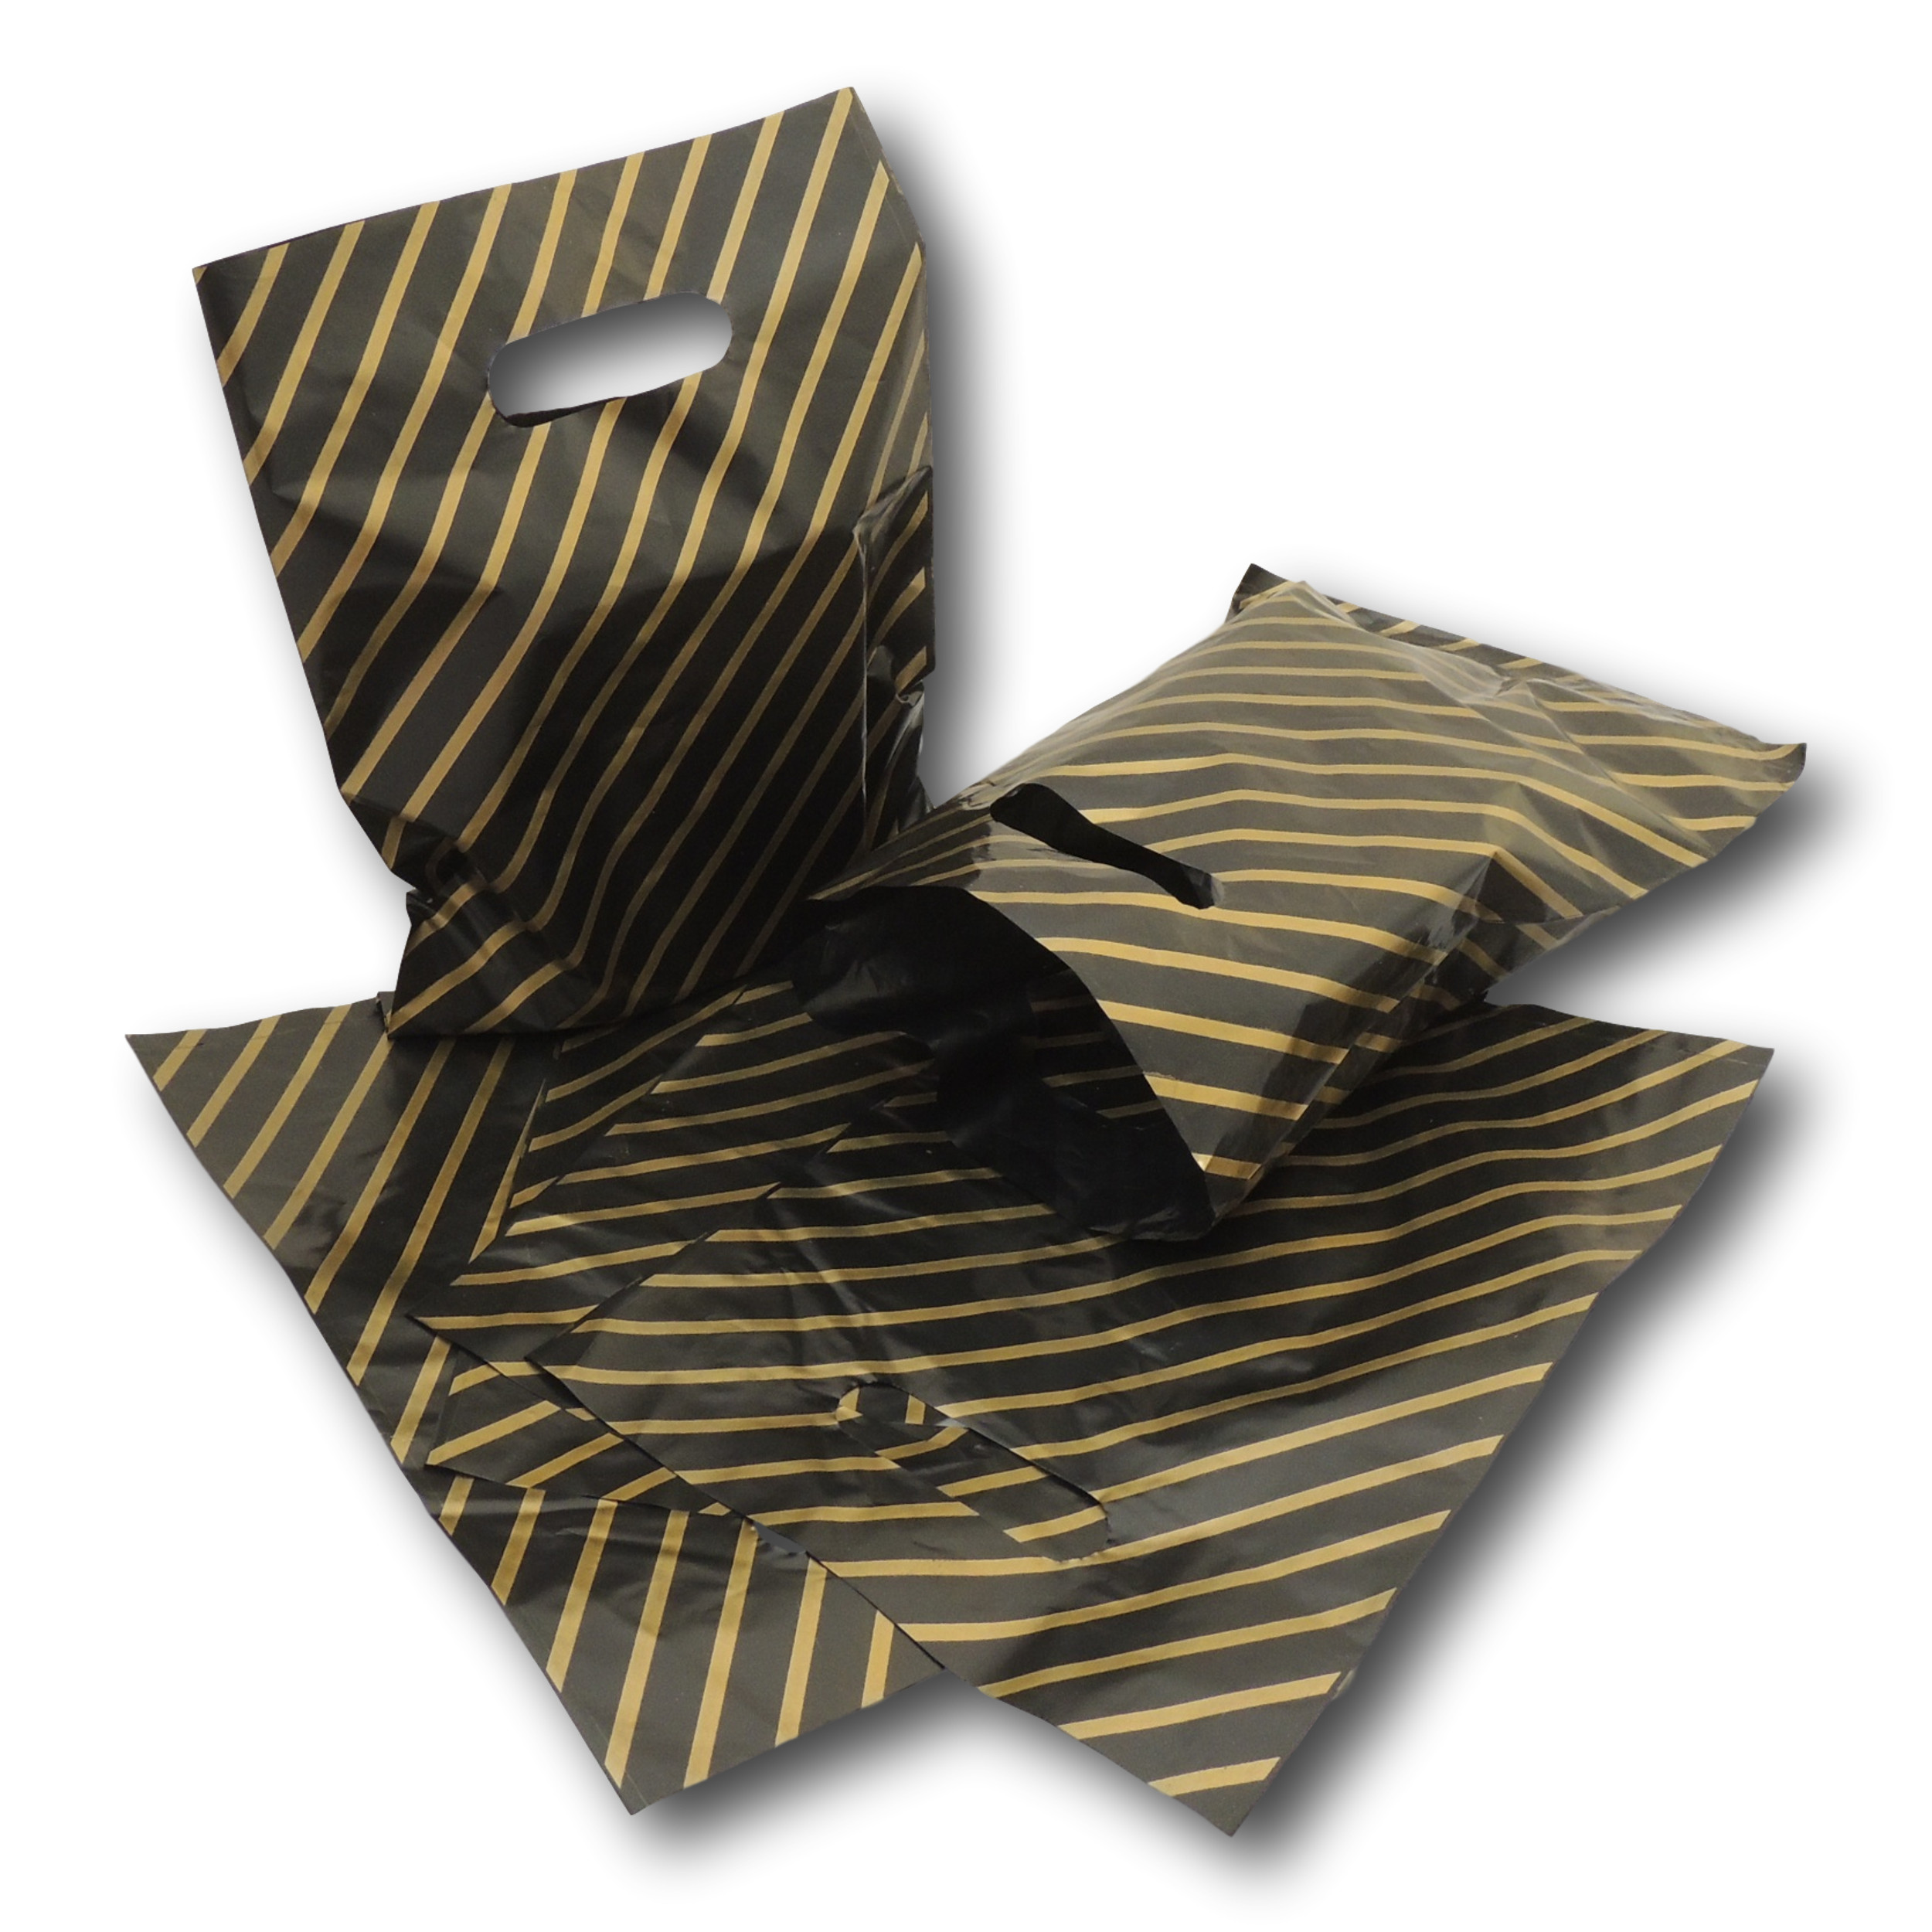 Gift/Fashion Bags - Black / Gold - Medium - 11.25'' x 9'' - 32mu (Pack of 100)